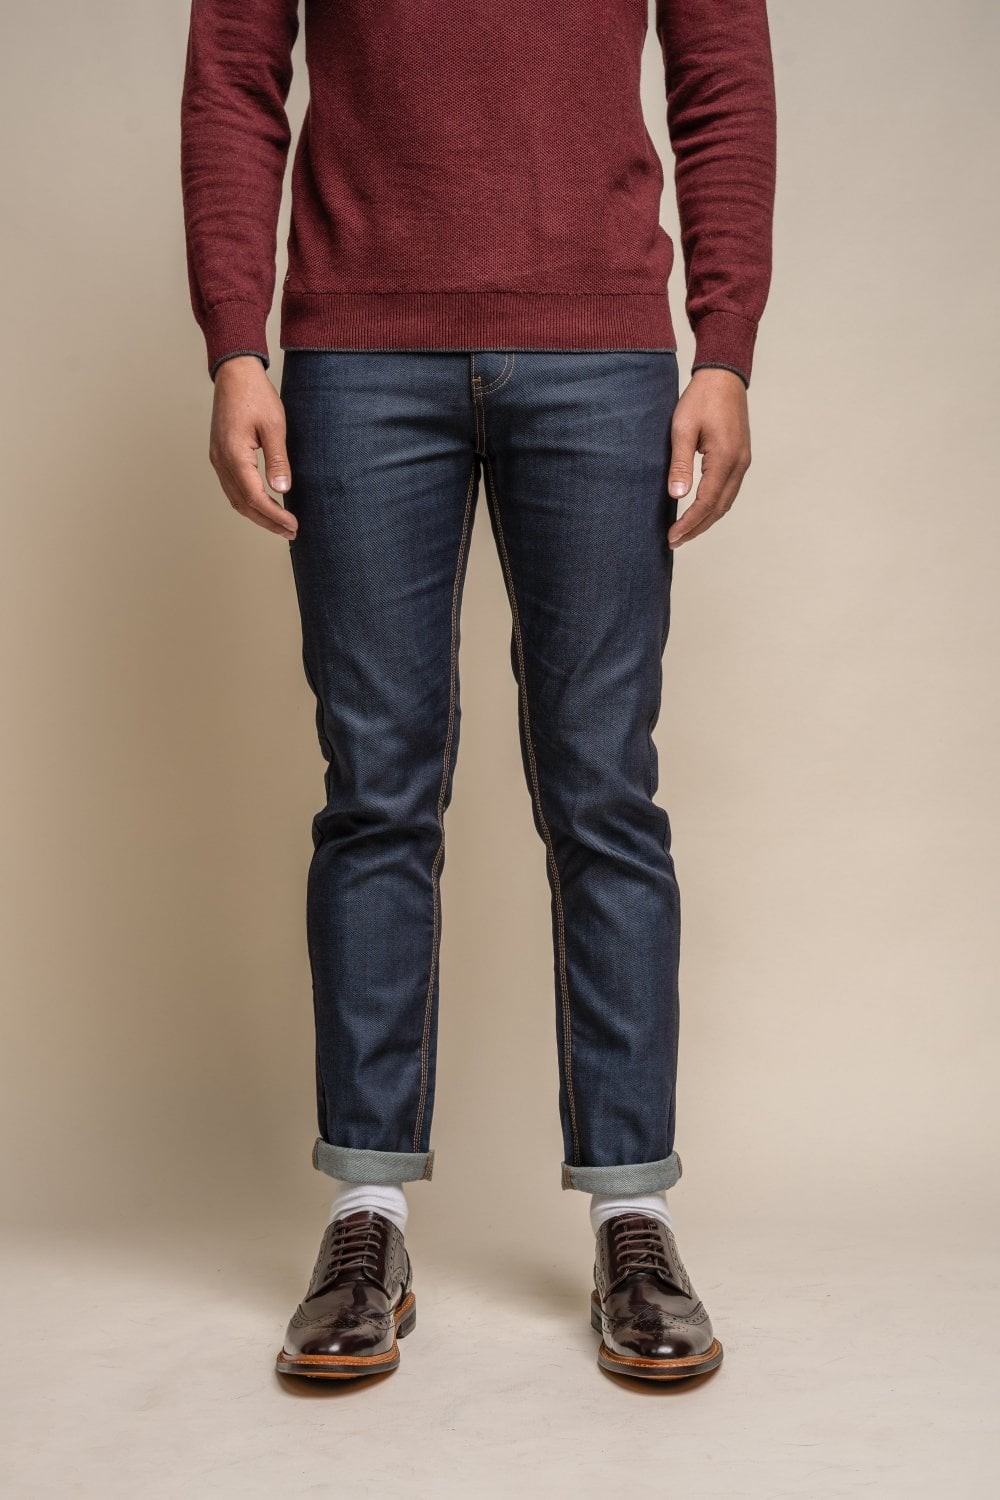 Men's Stretch Slim Fit Jeans - COLE RAW